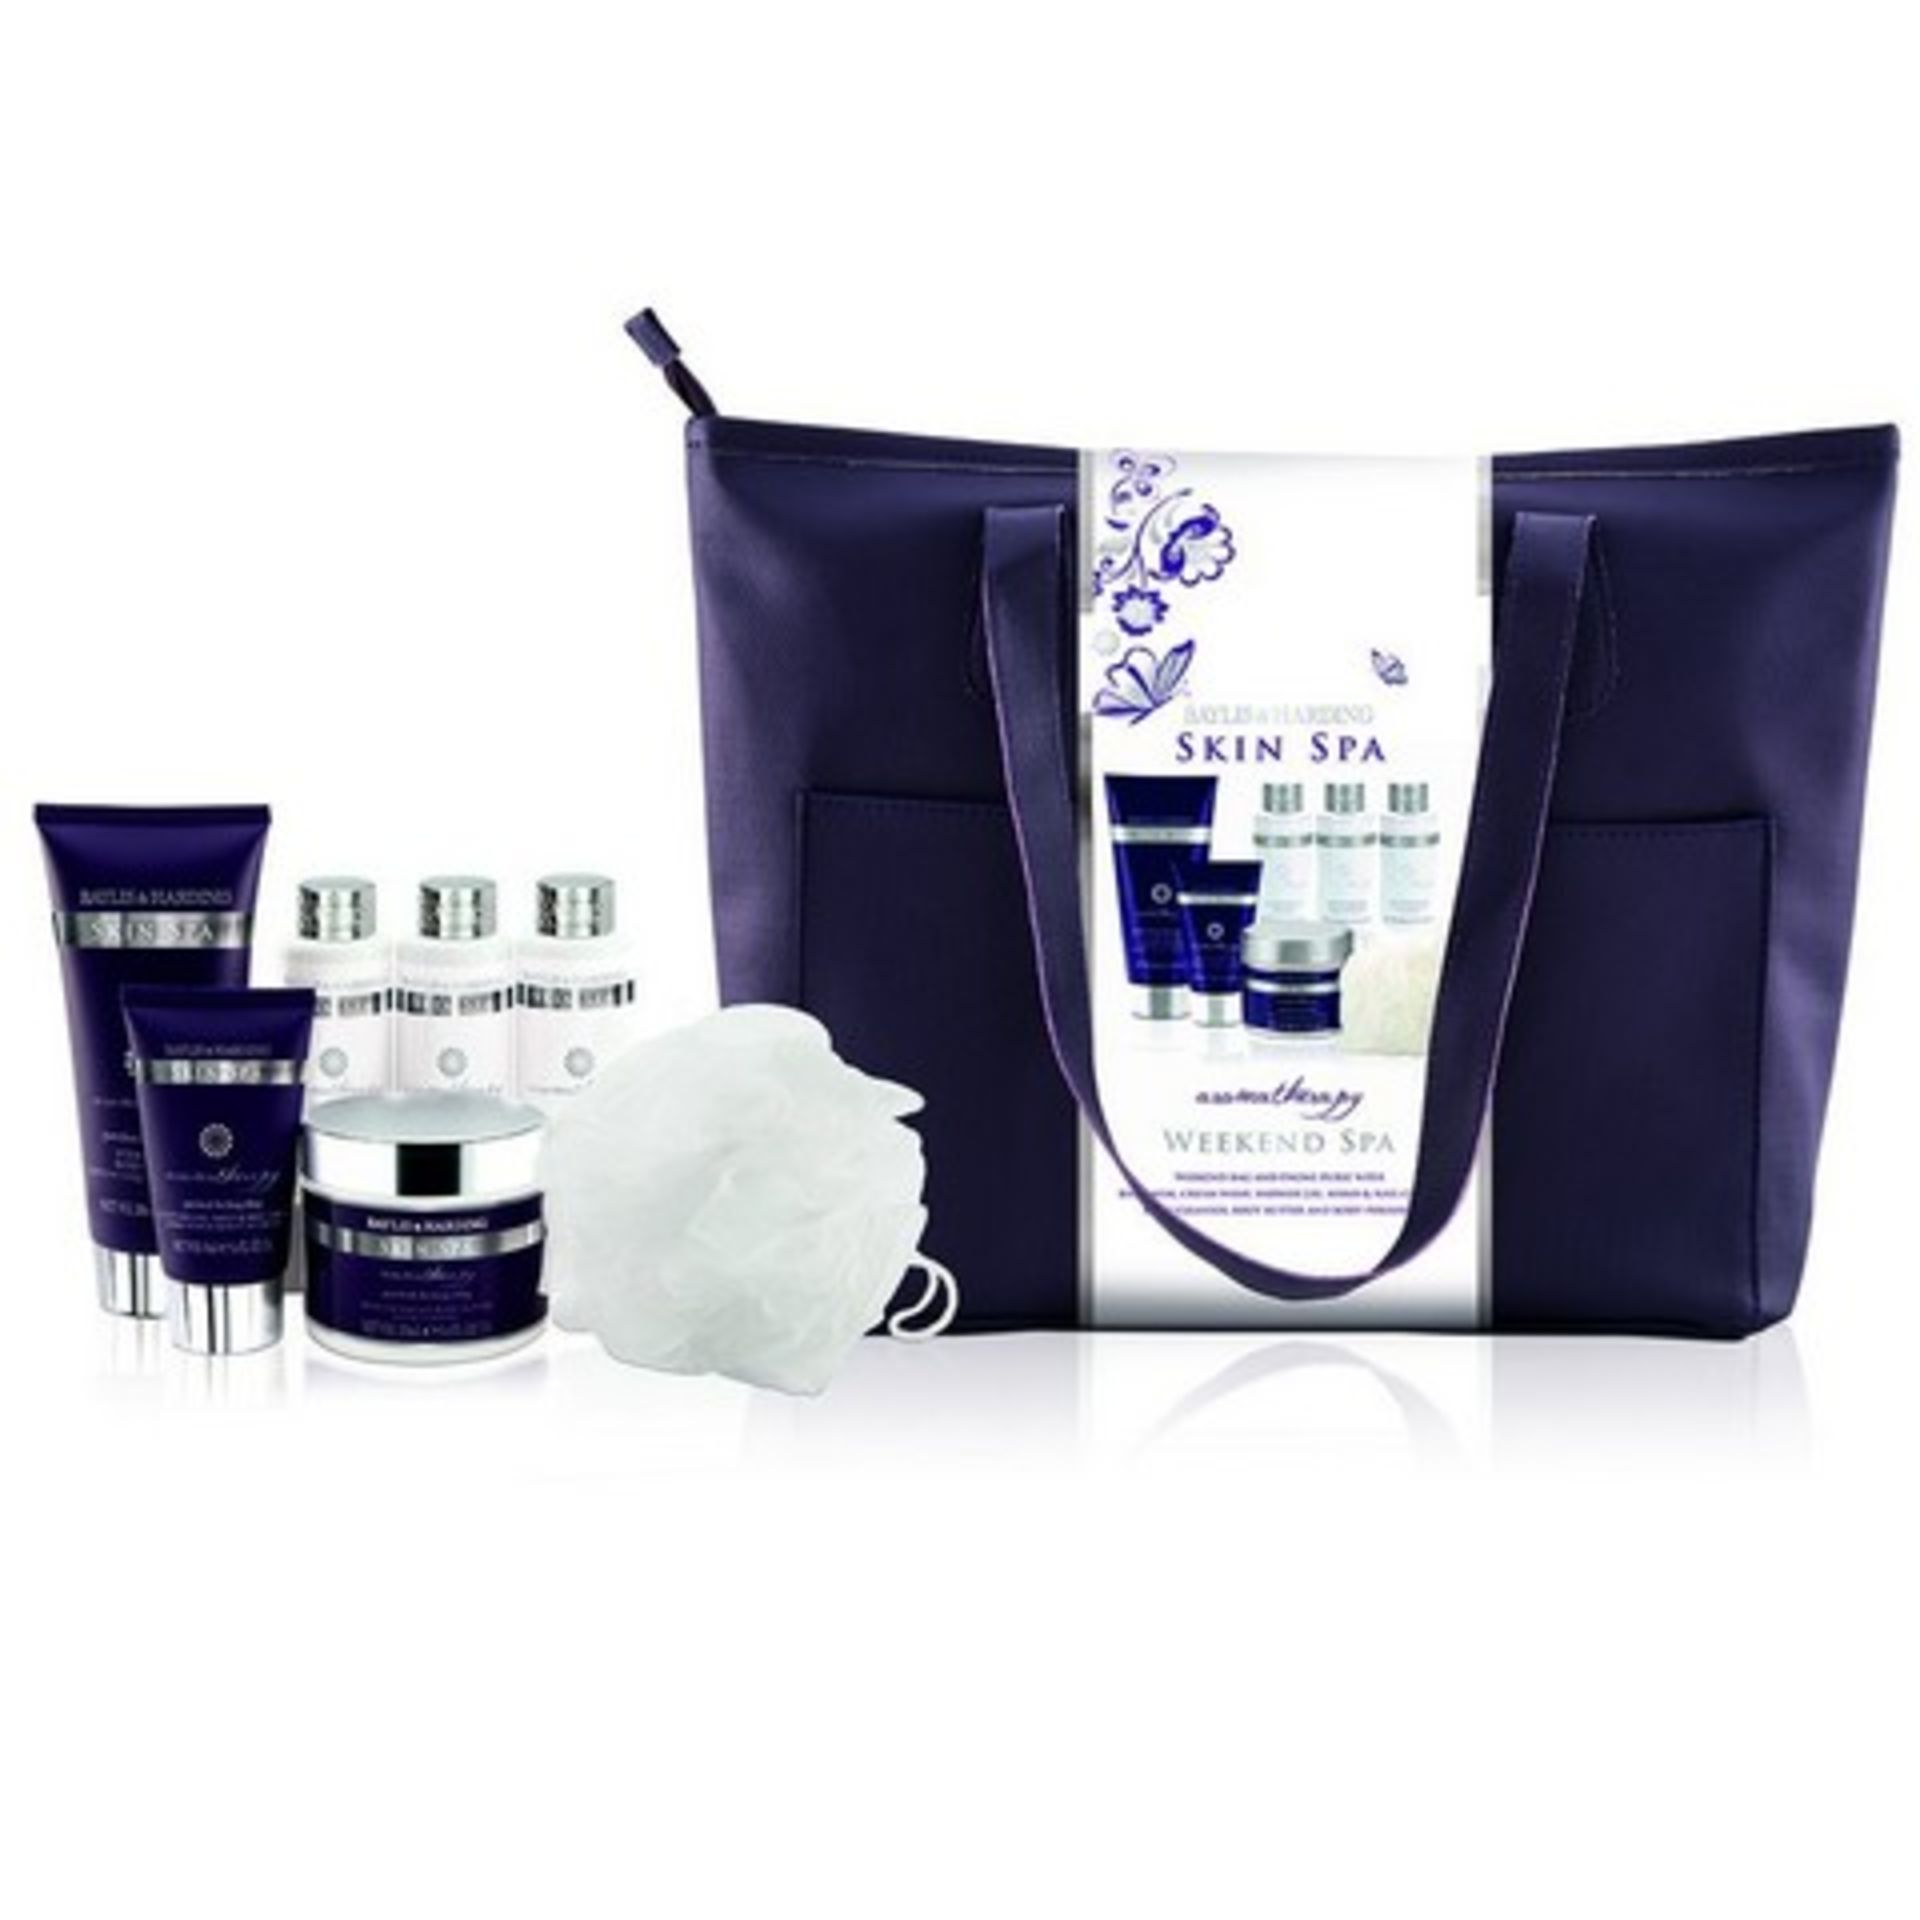 + VAT Brand New Baylis & Harding Relax And Retreat Aromatherapy Skin Spa Weekend Bag Inc Body